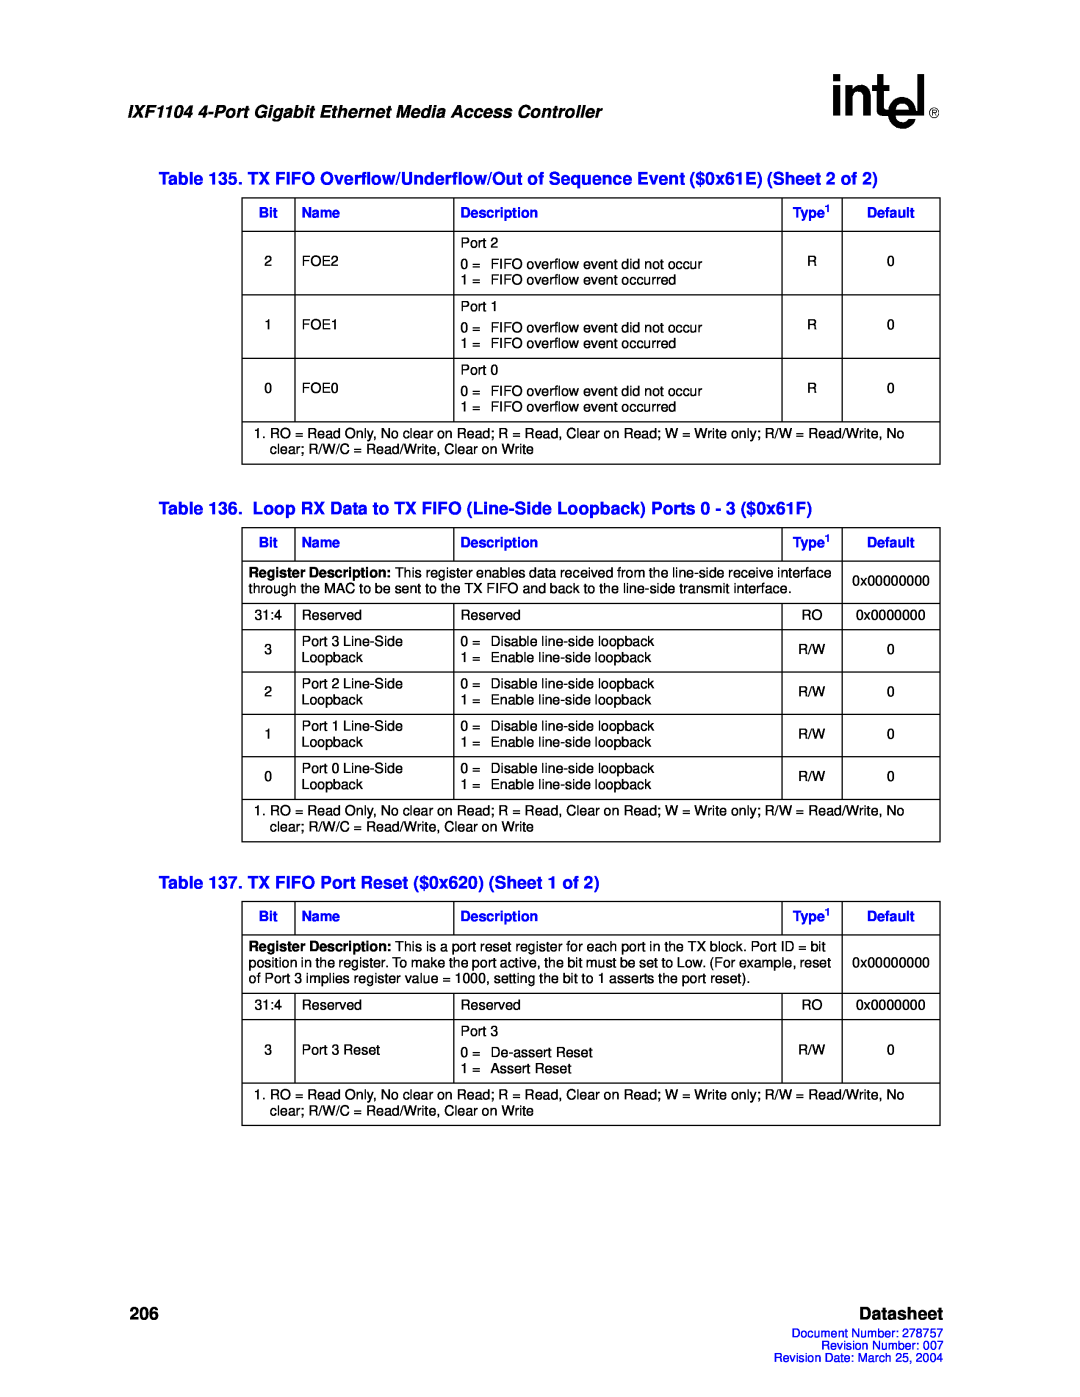 Intel IXF1104 manual Datasheet 